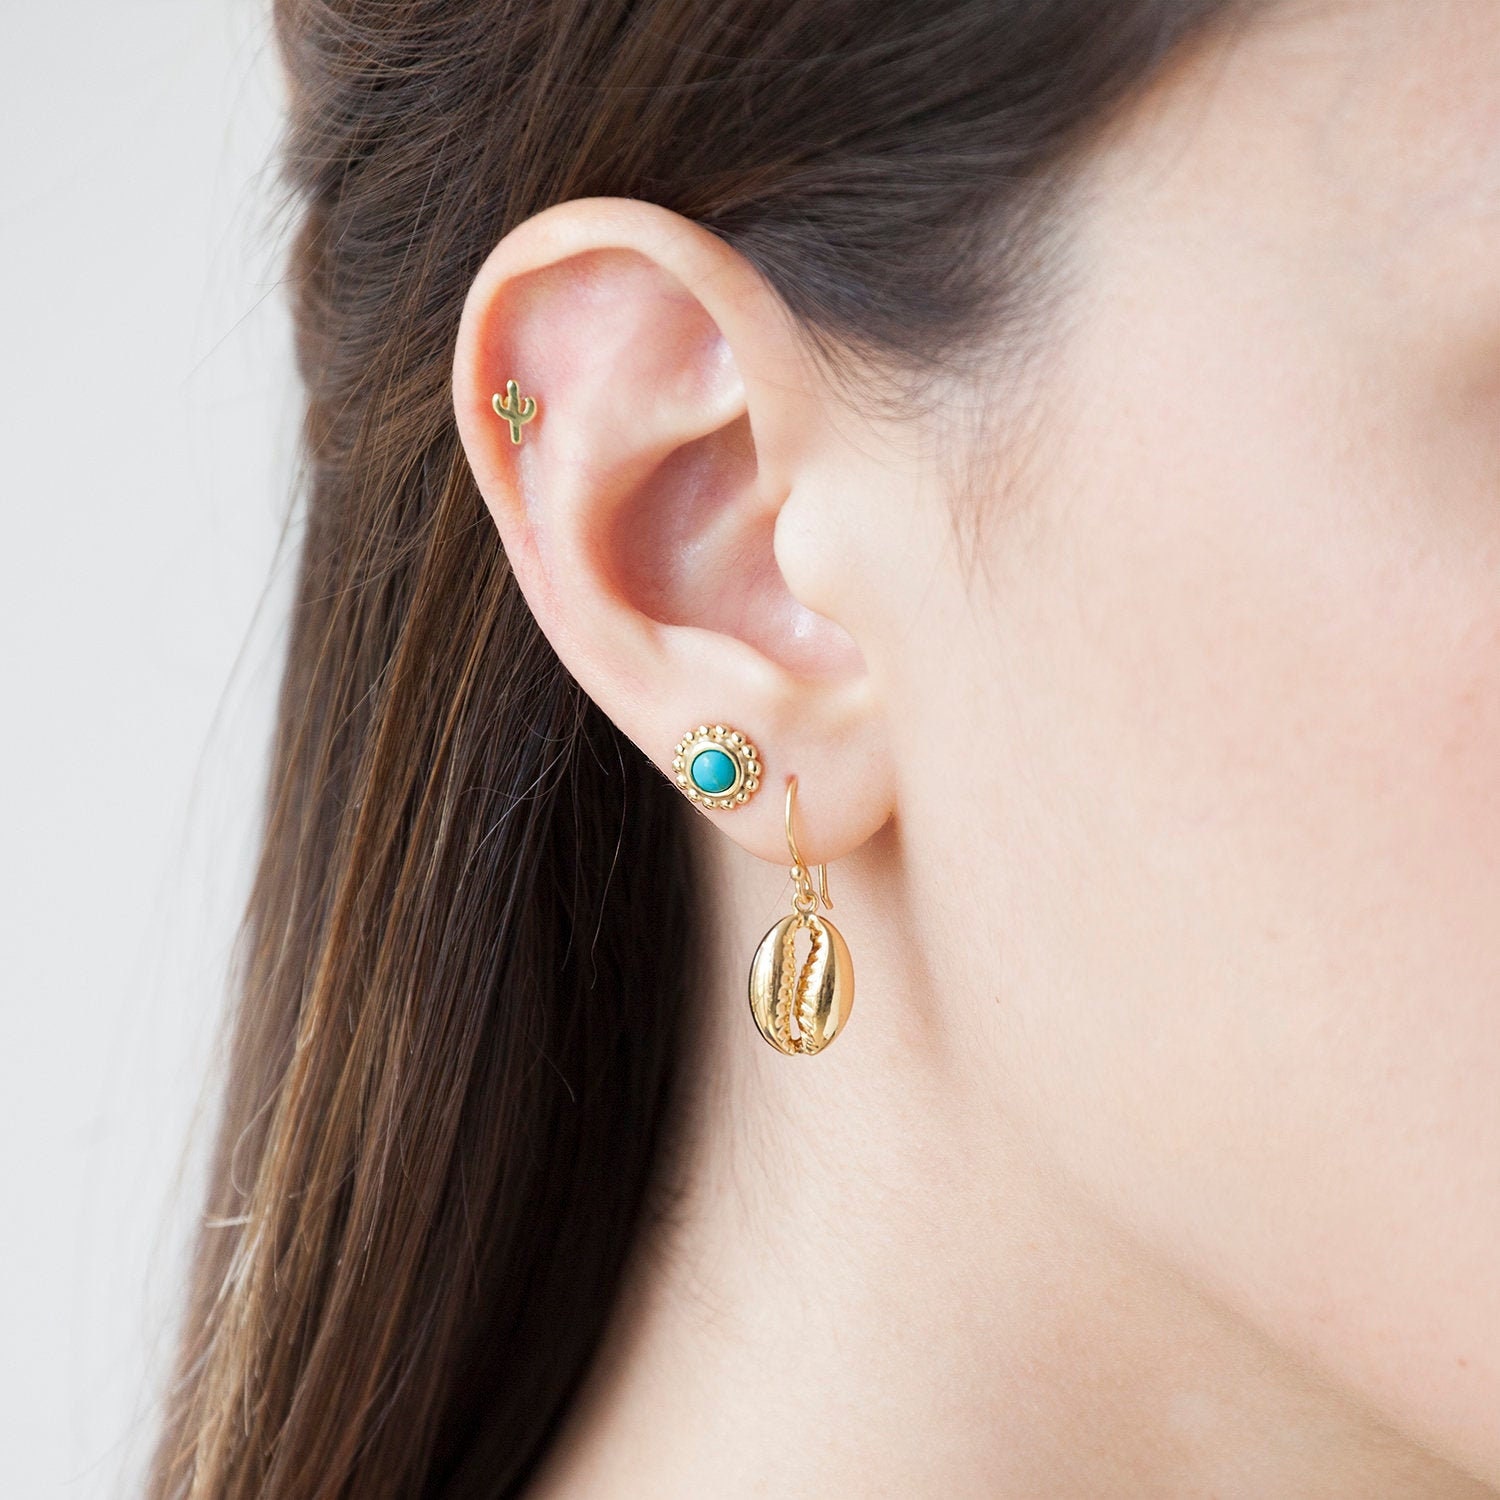 Cactus earrings gold cactus stud earrings tiny studs dainty | Etsy